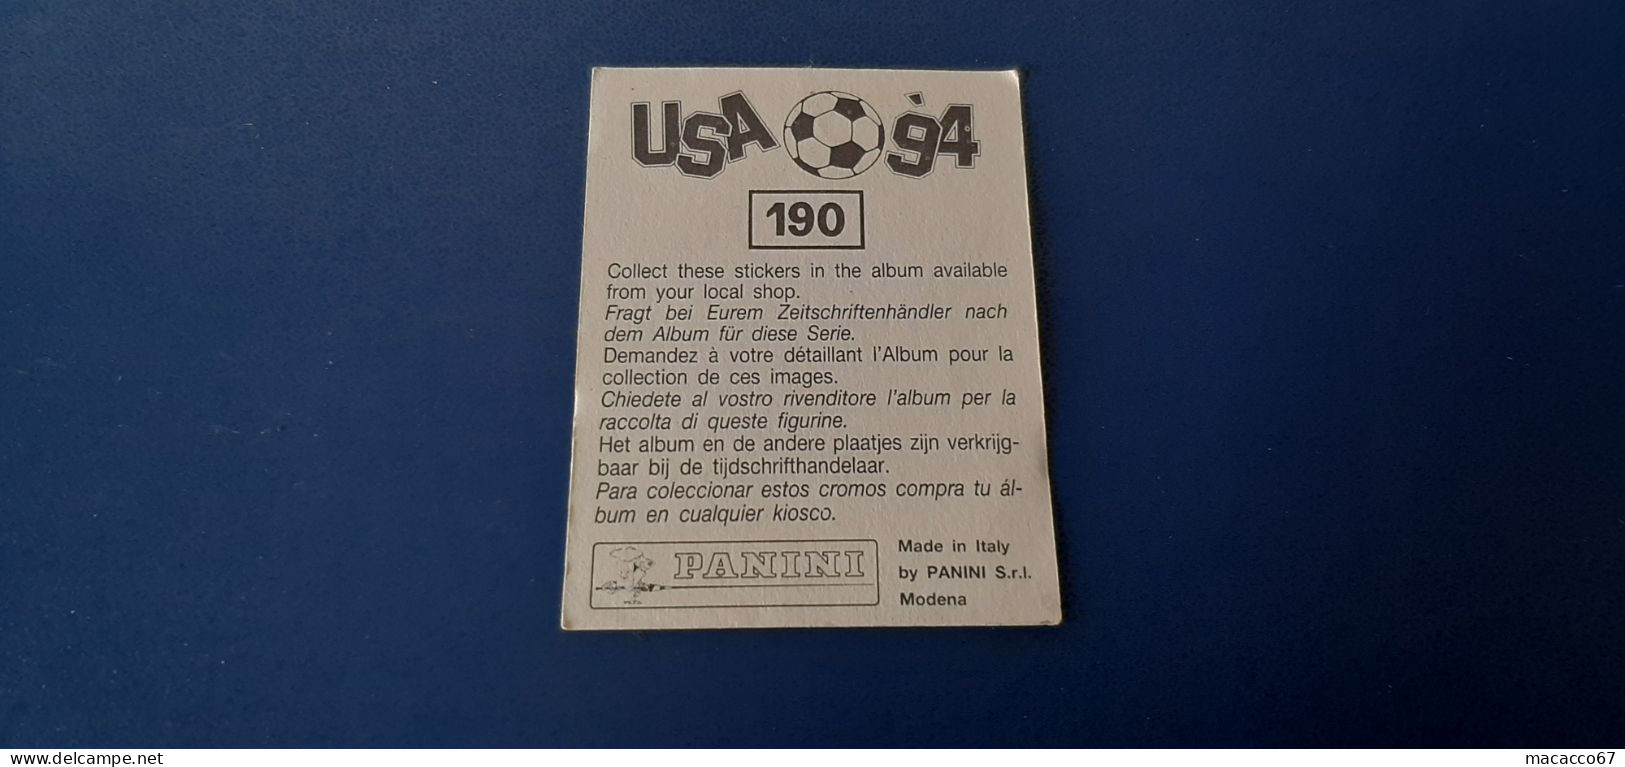 Figurina Panini WM USA 94 - 190 Alcorta Spagna - Edizione Italiana